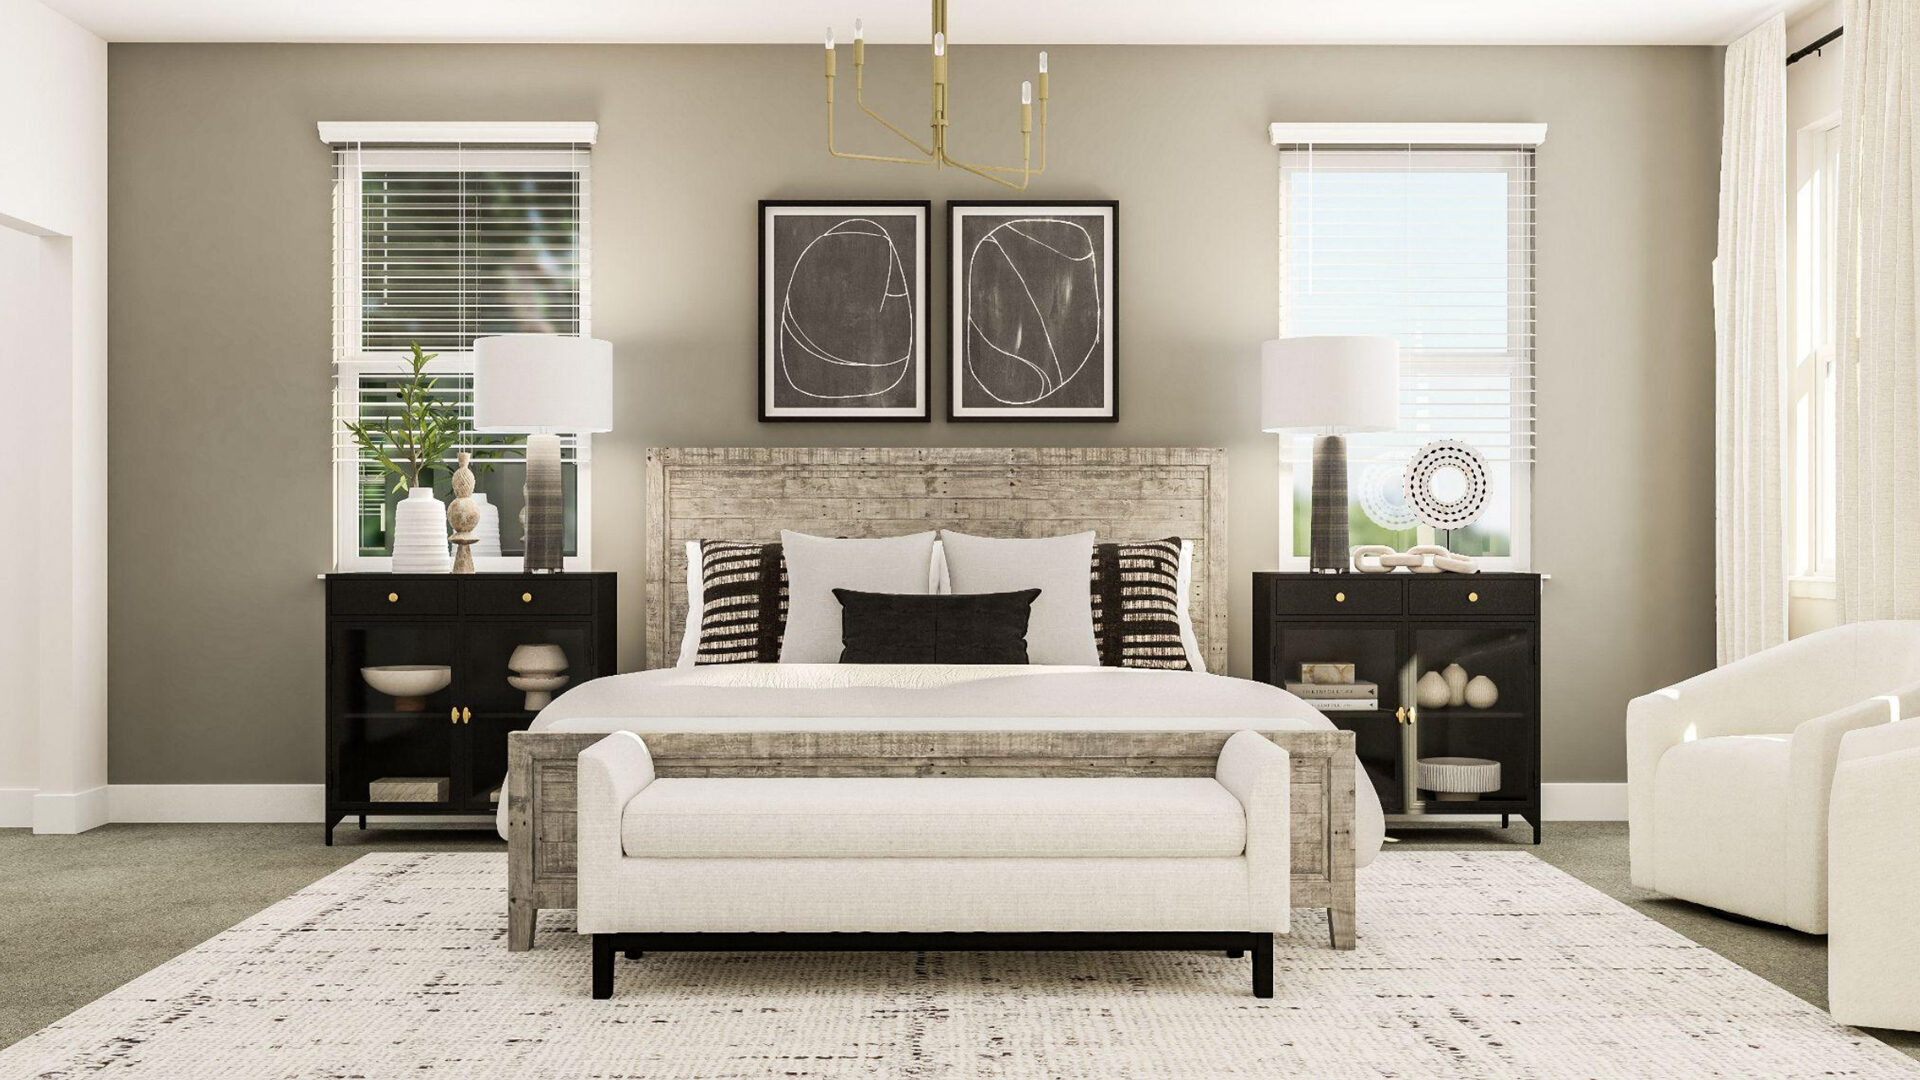 redefined monochromatic neutral bedroom decor